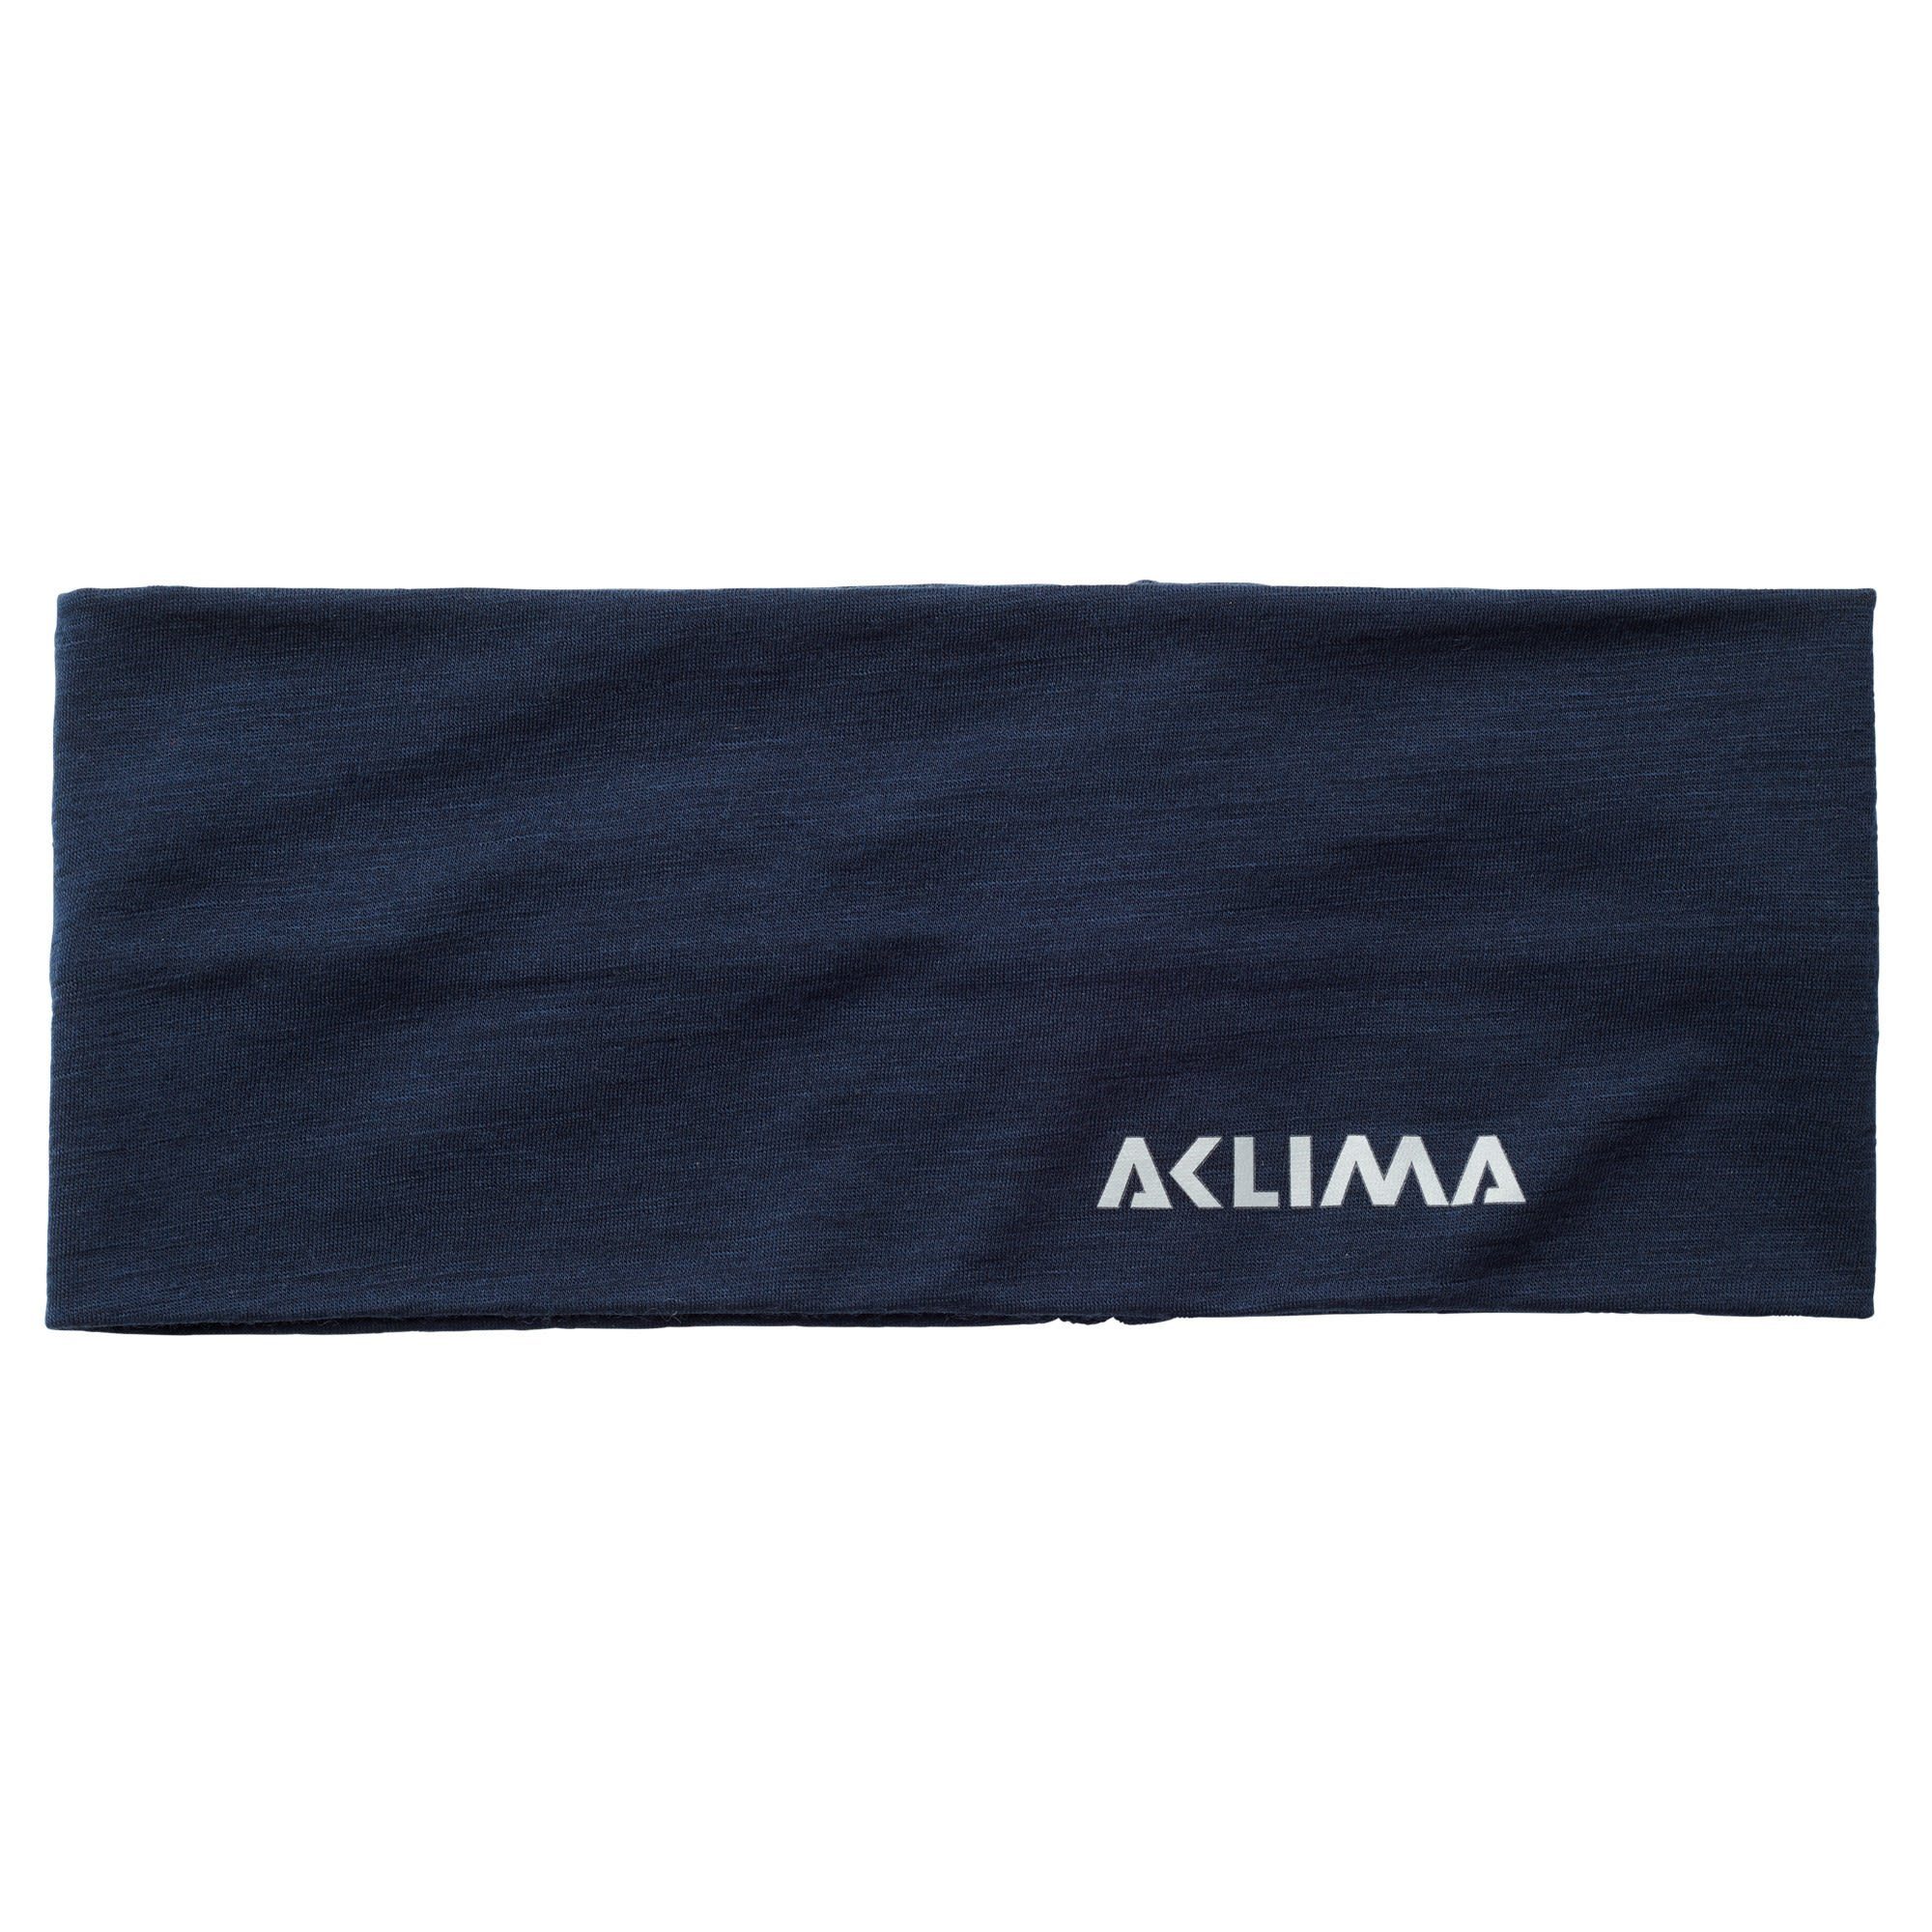 Blazer Aclima Stirnband Headband Navy Aclima Lightwool Accessoires